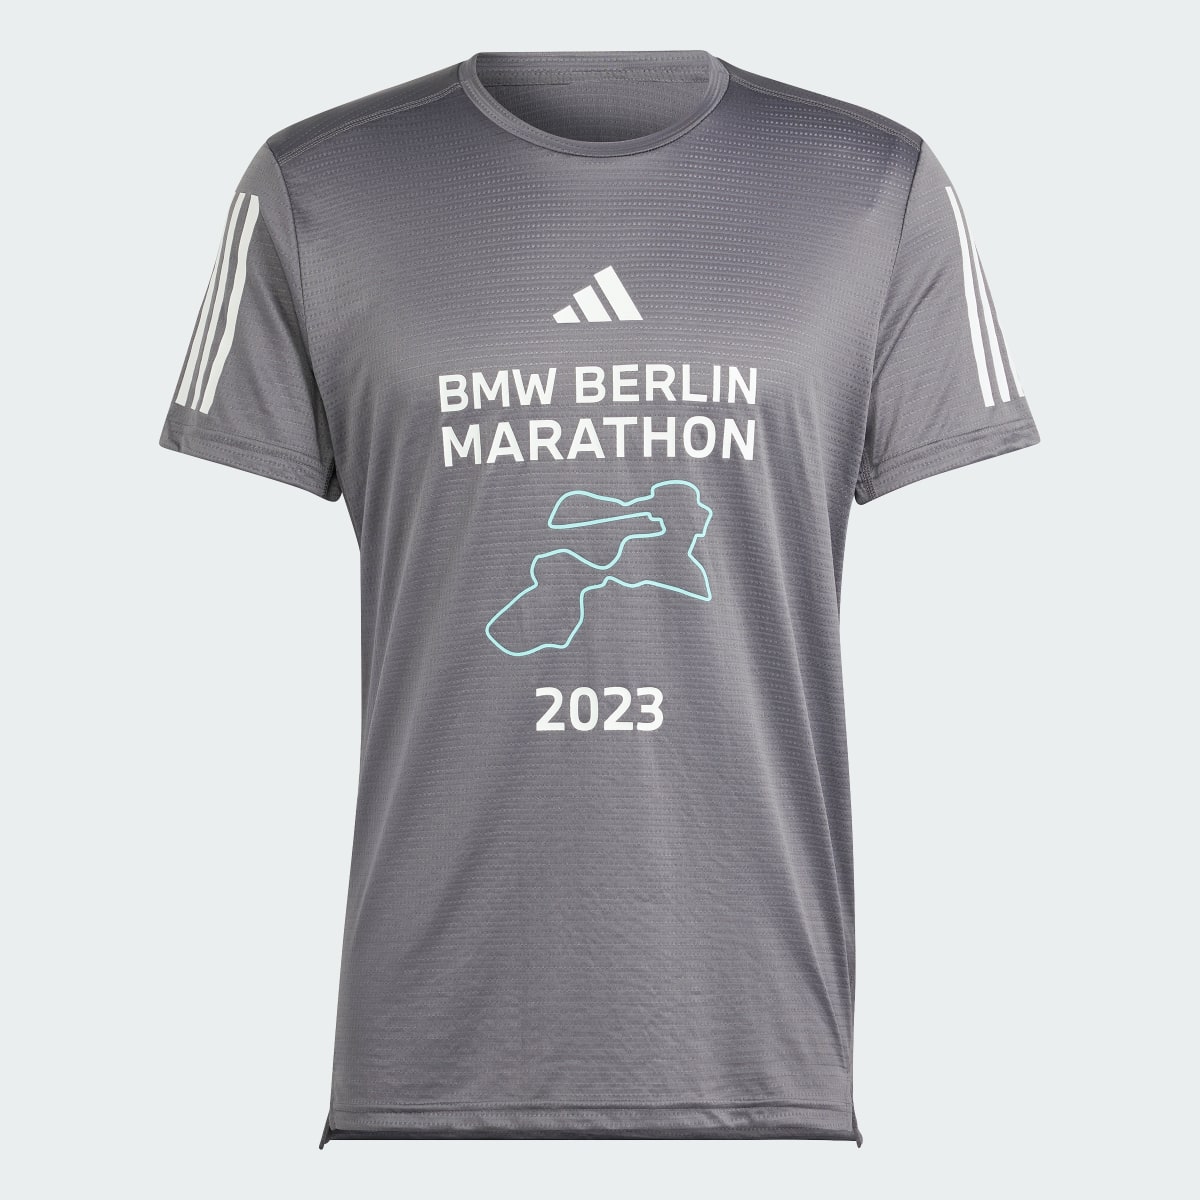 Adidas T-shirt Event da BMW BERLIN-MARATHON 2023. 5